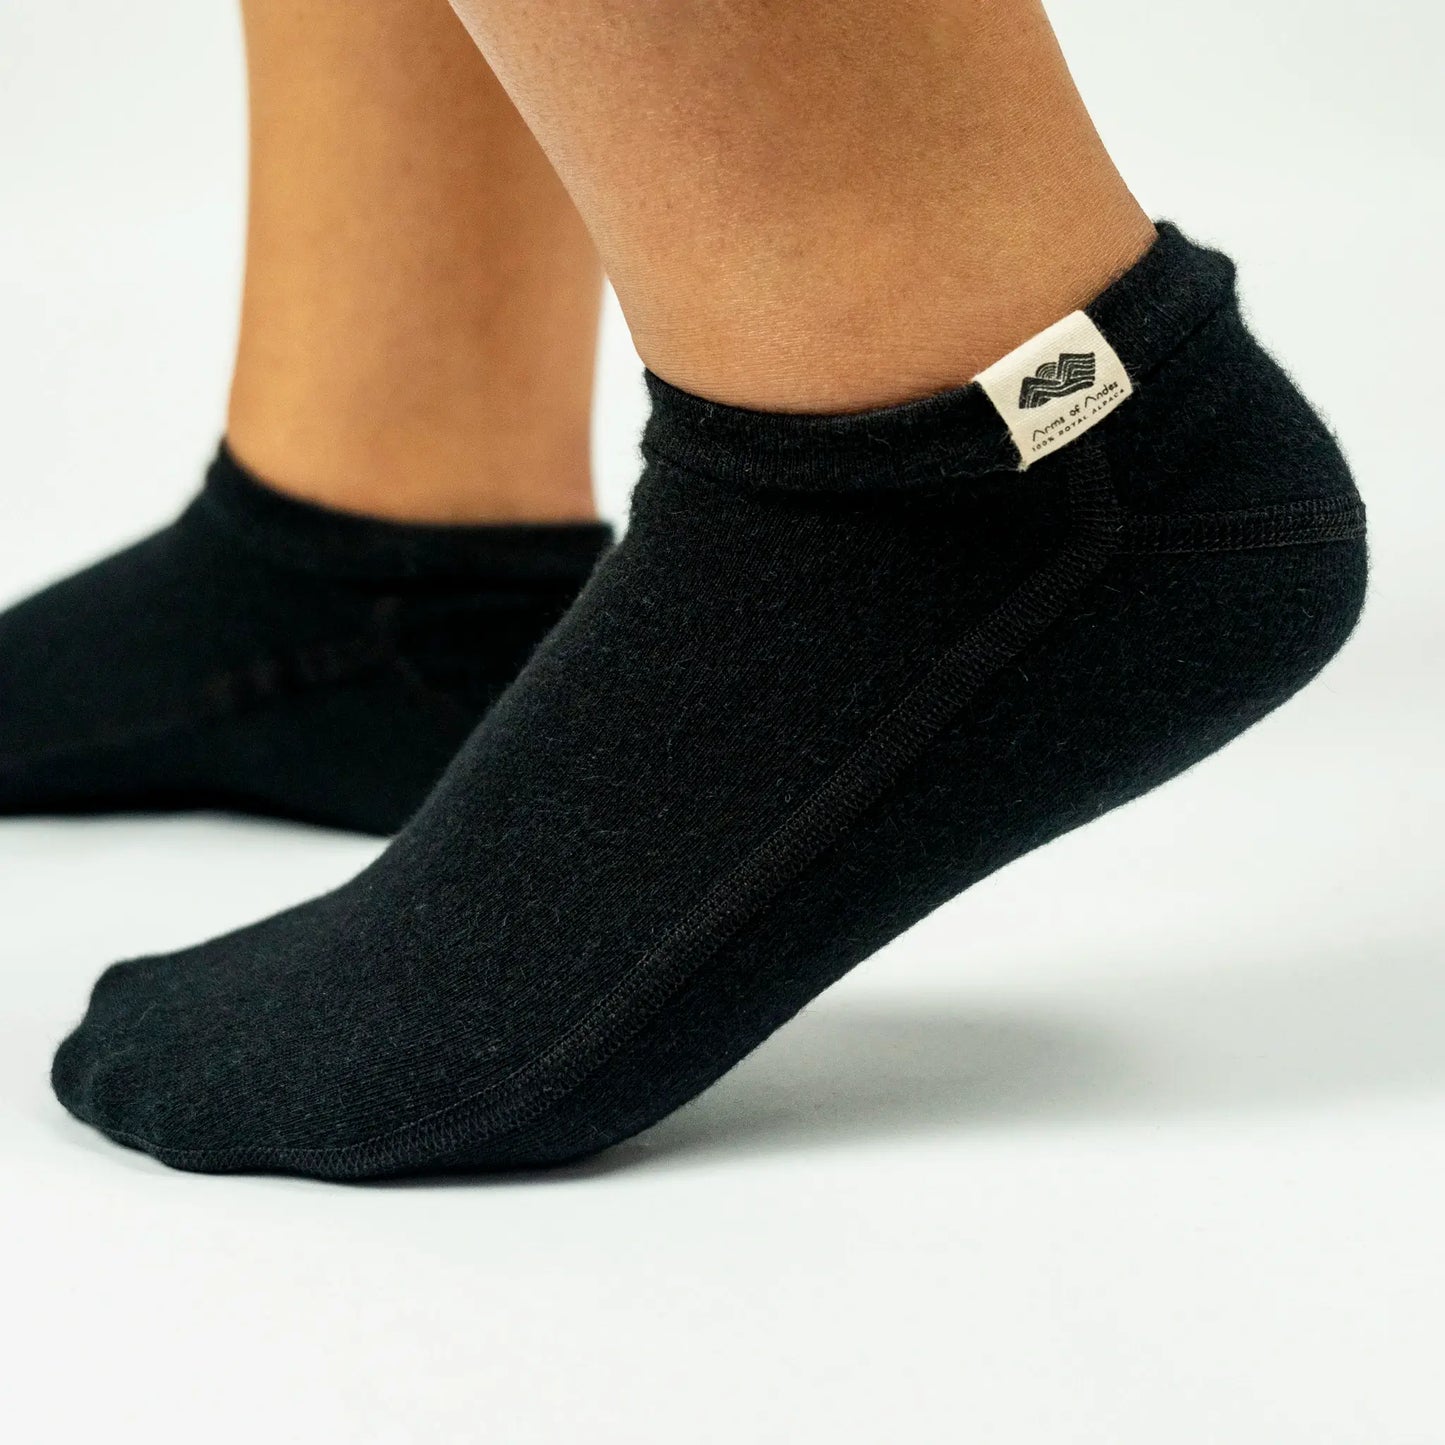 unisex slipper socks all activities color gray